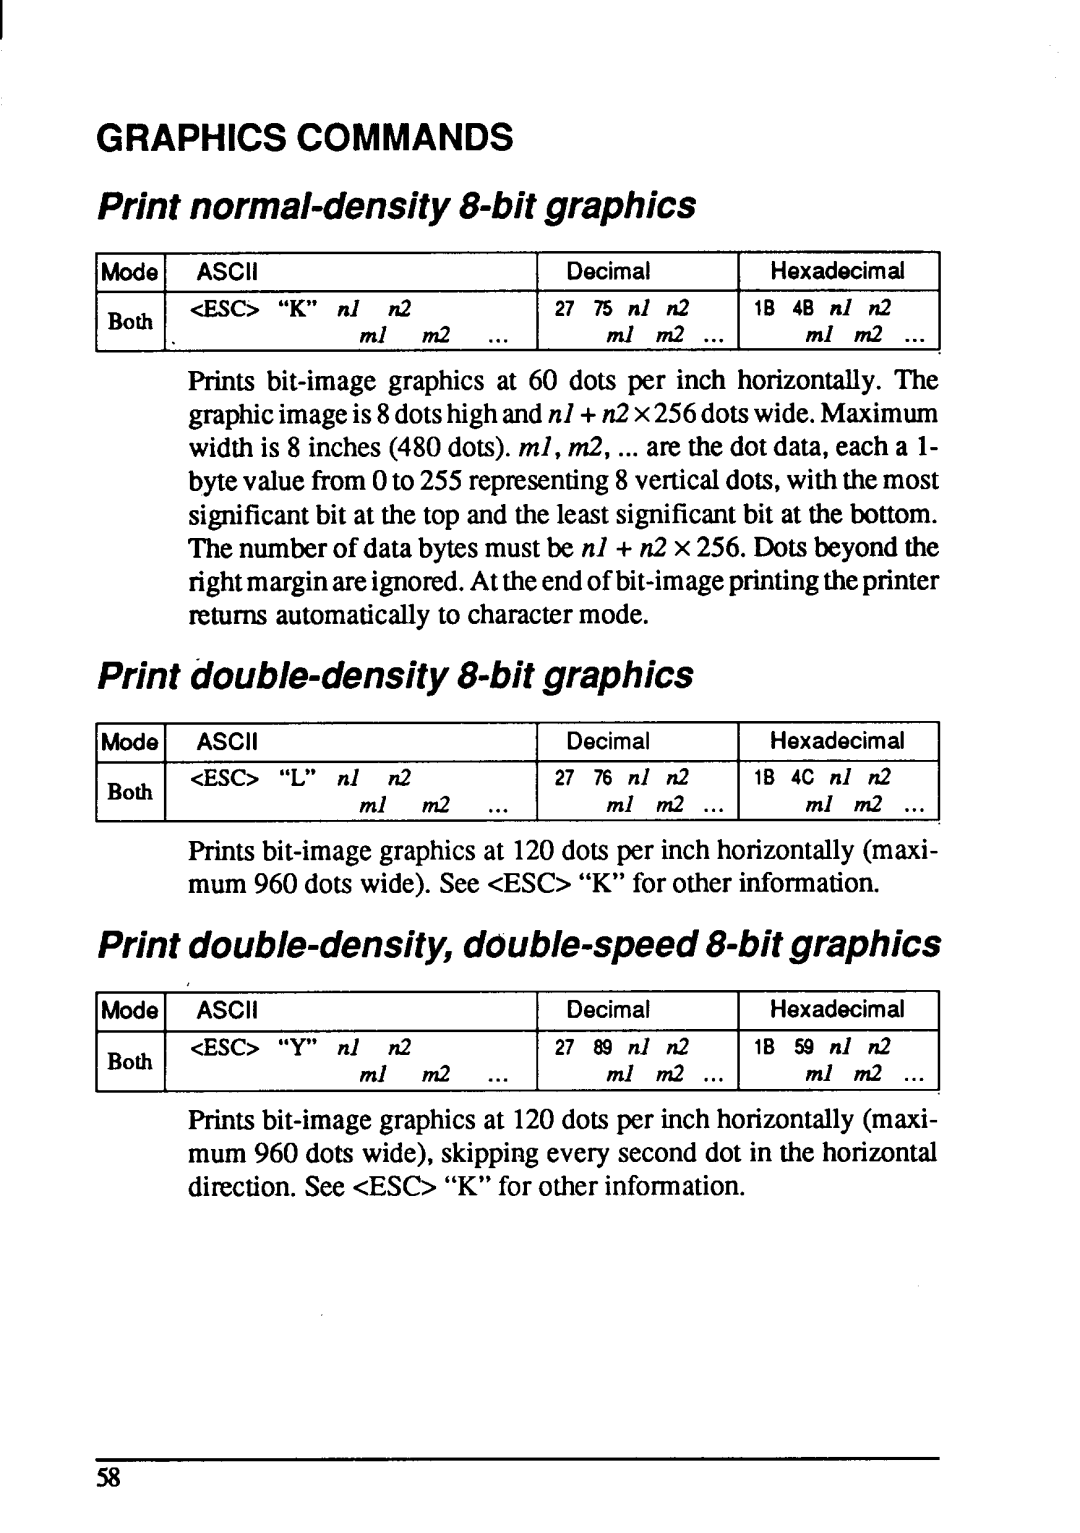 Star Micronics NX-1001 manual Graphics Commands 